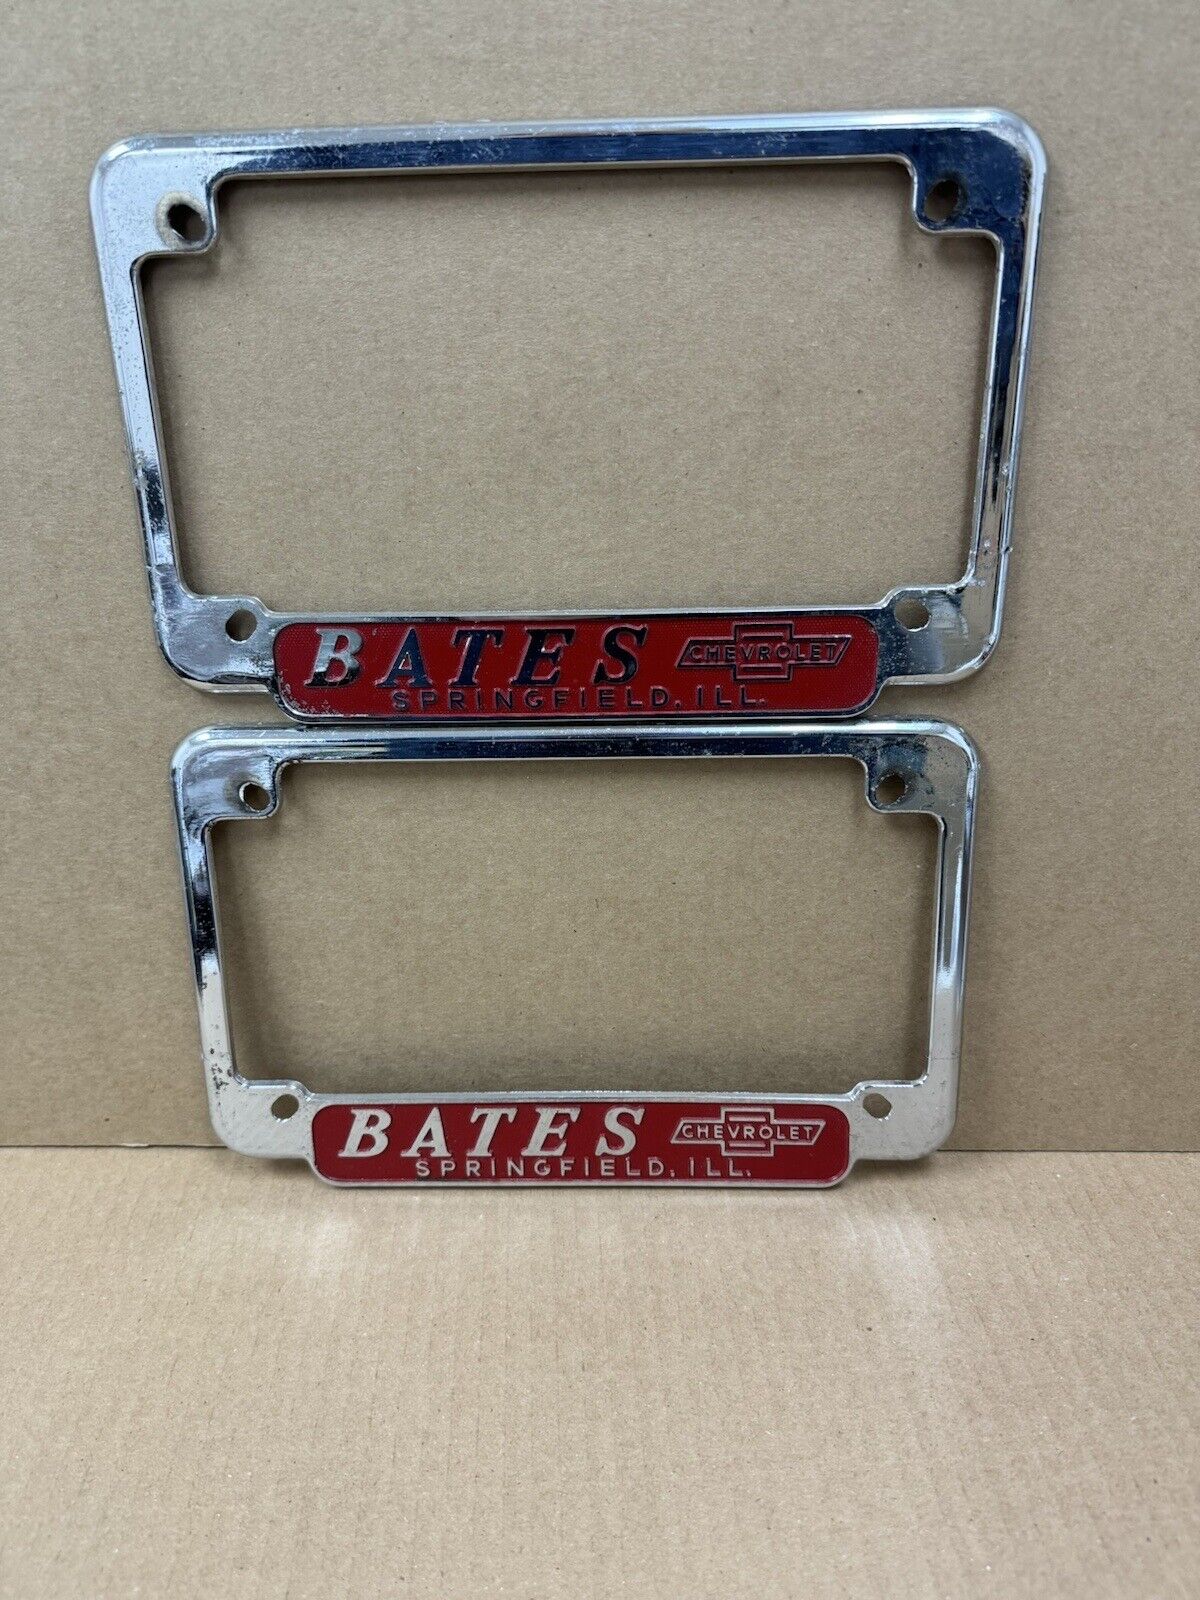 Bates Chevrolet Springfield Illinois  License Plate Frames Chevy Corvette Impala